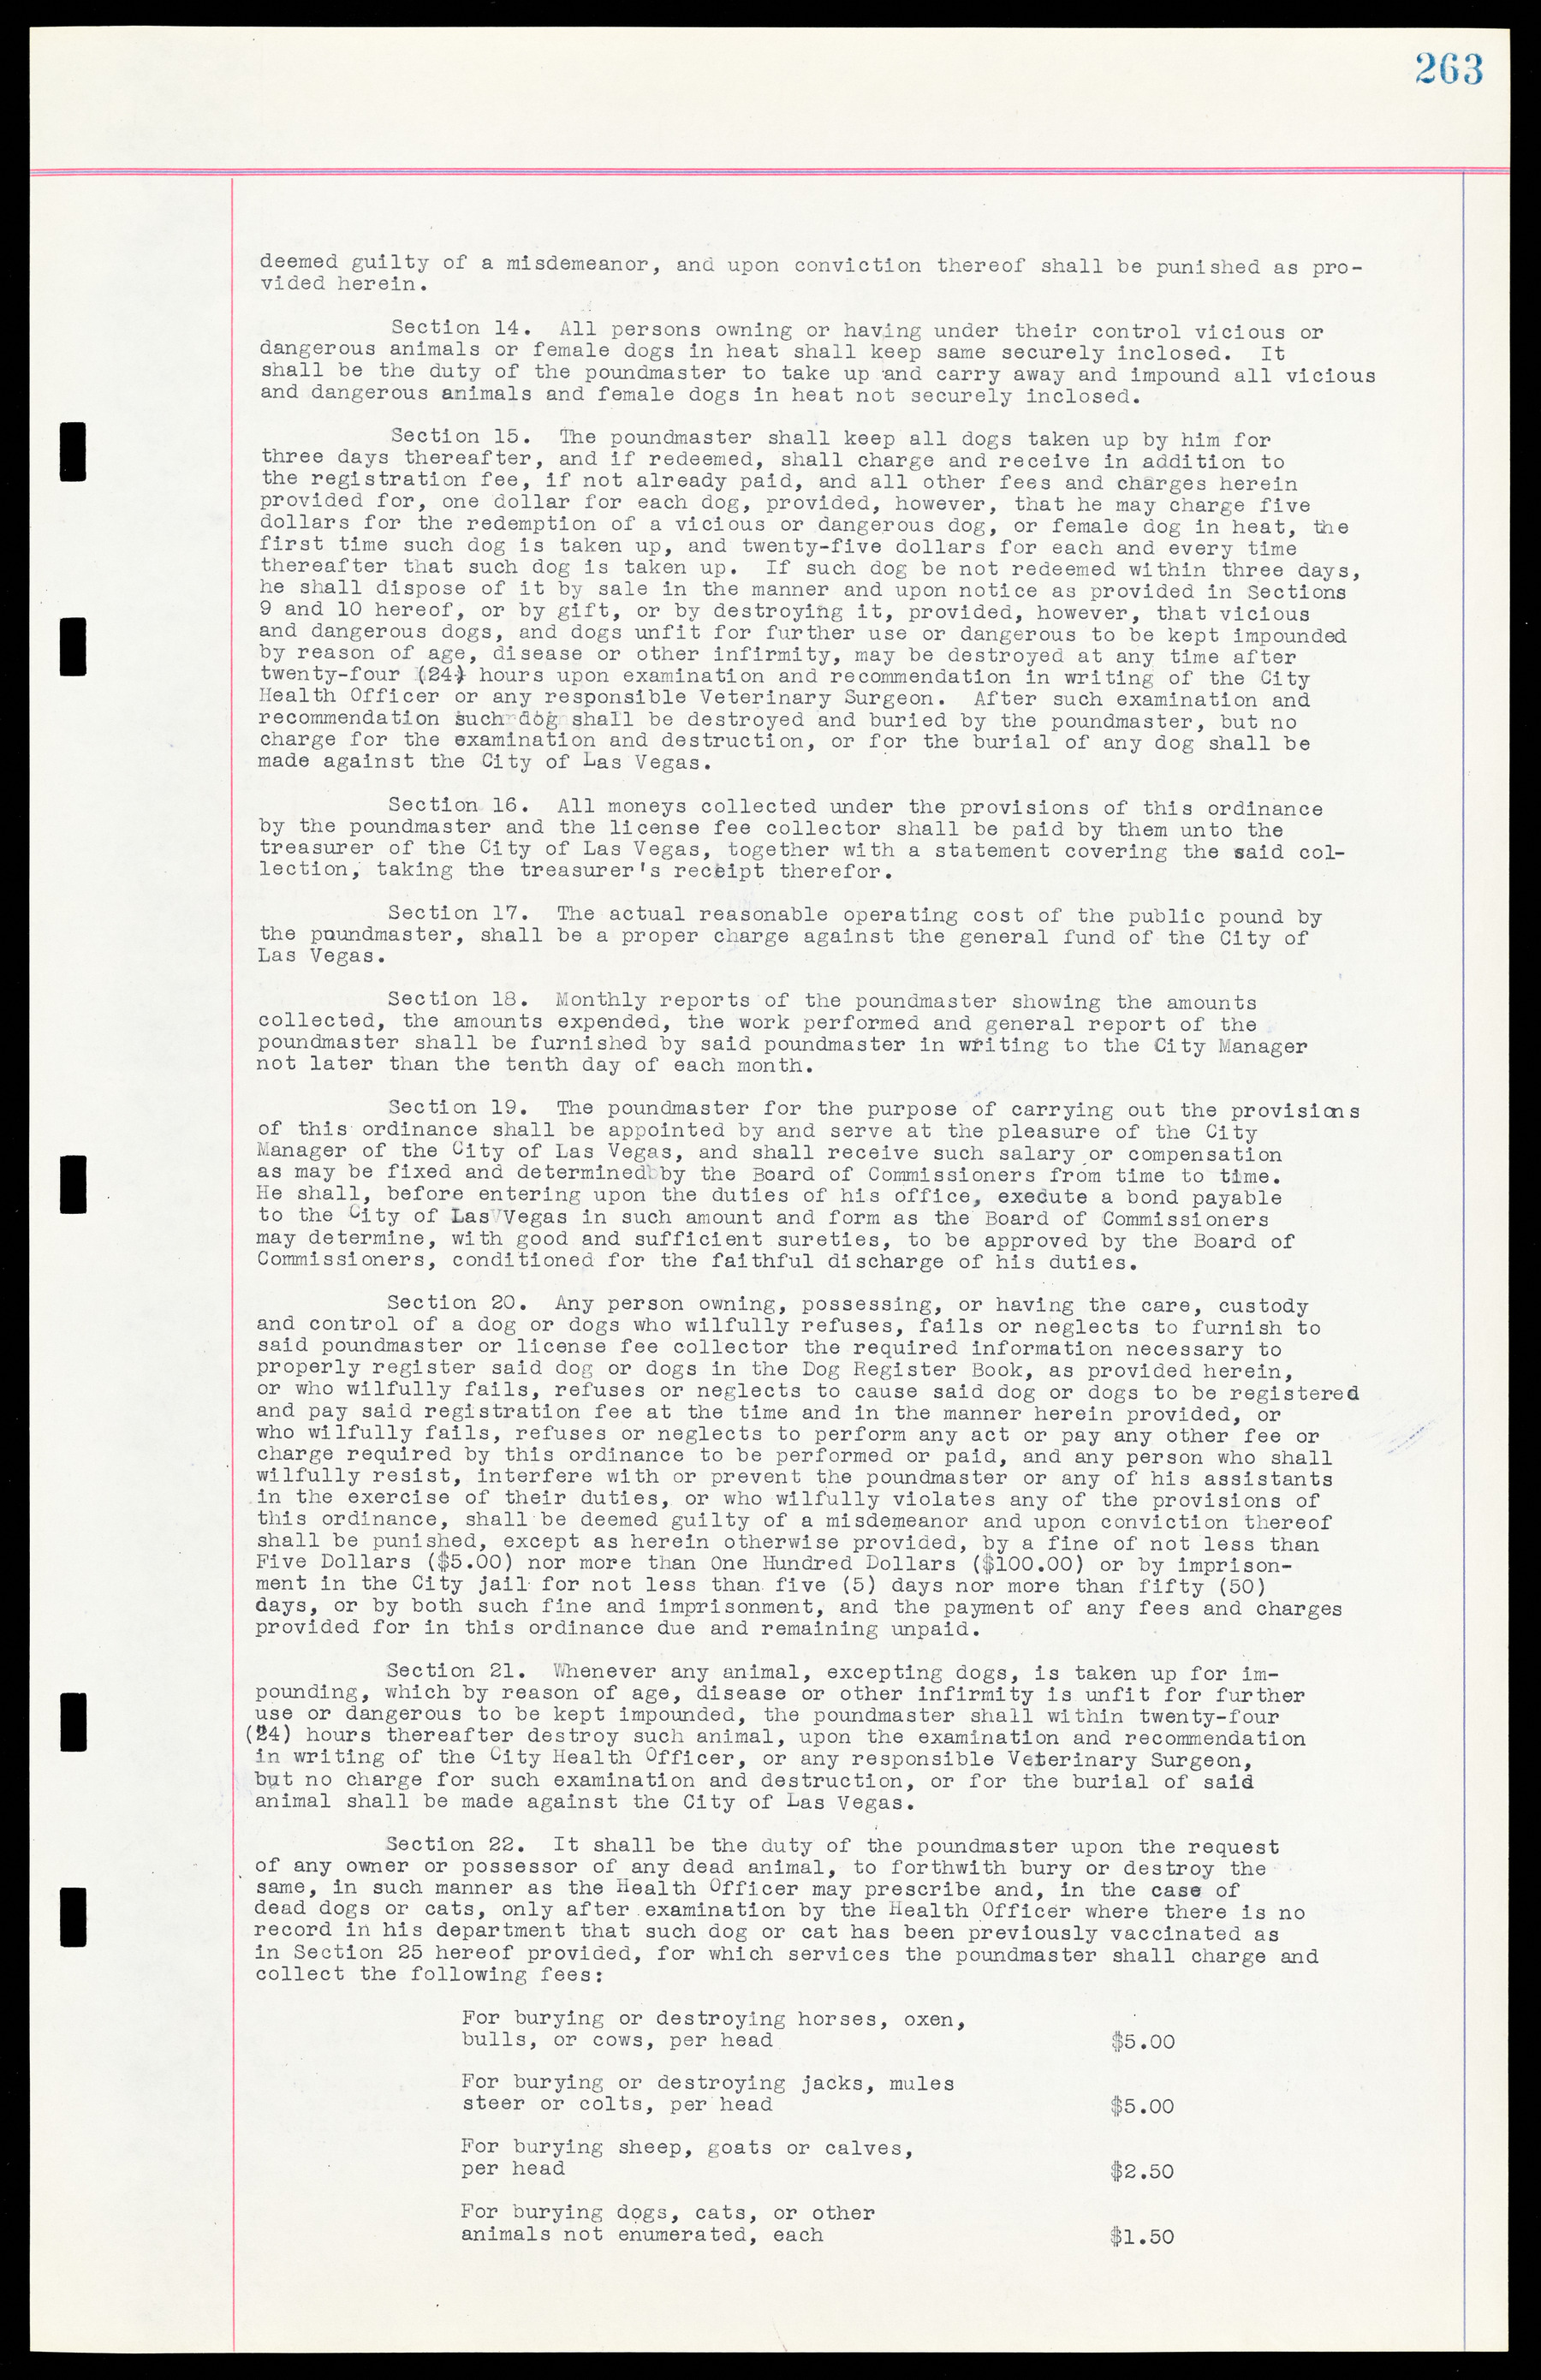 Las Vegas City Ordinances, March 31, 1933 to October 25, 1950, lvc000014-292